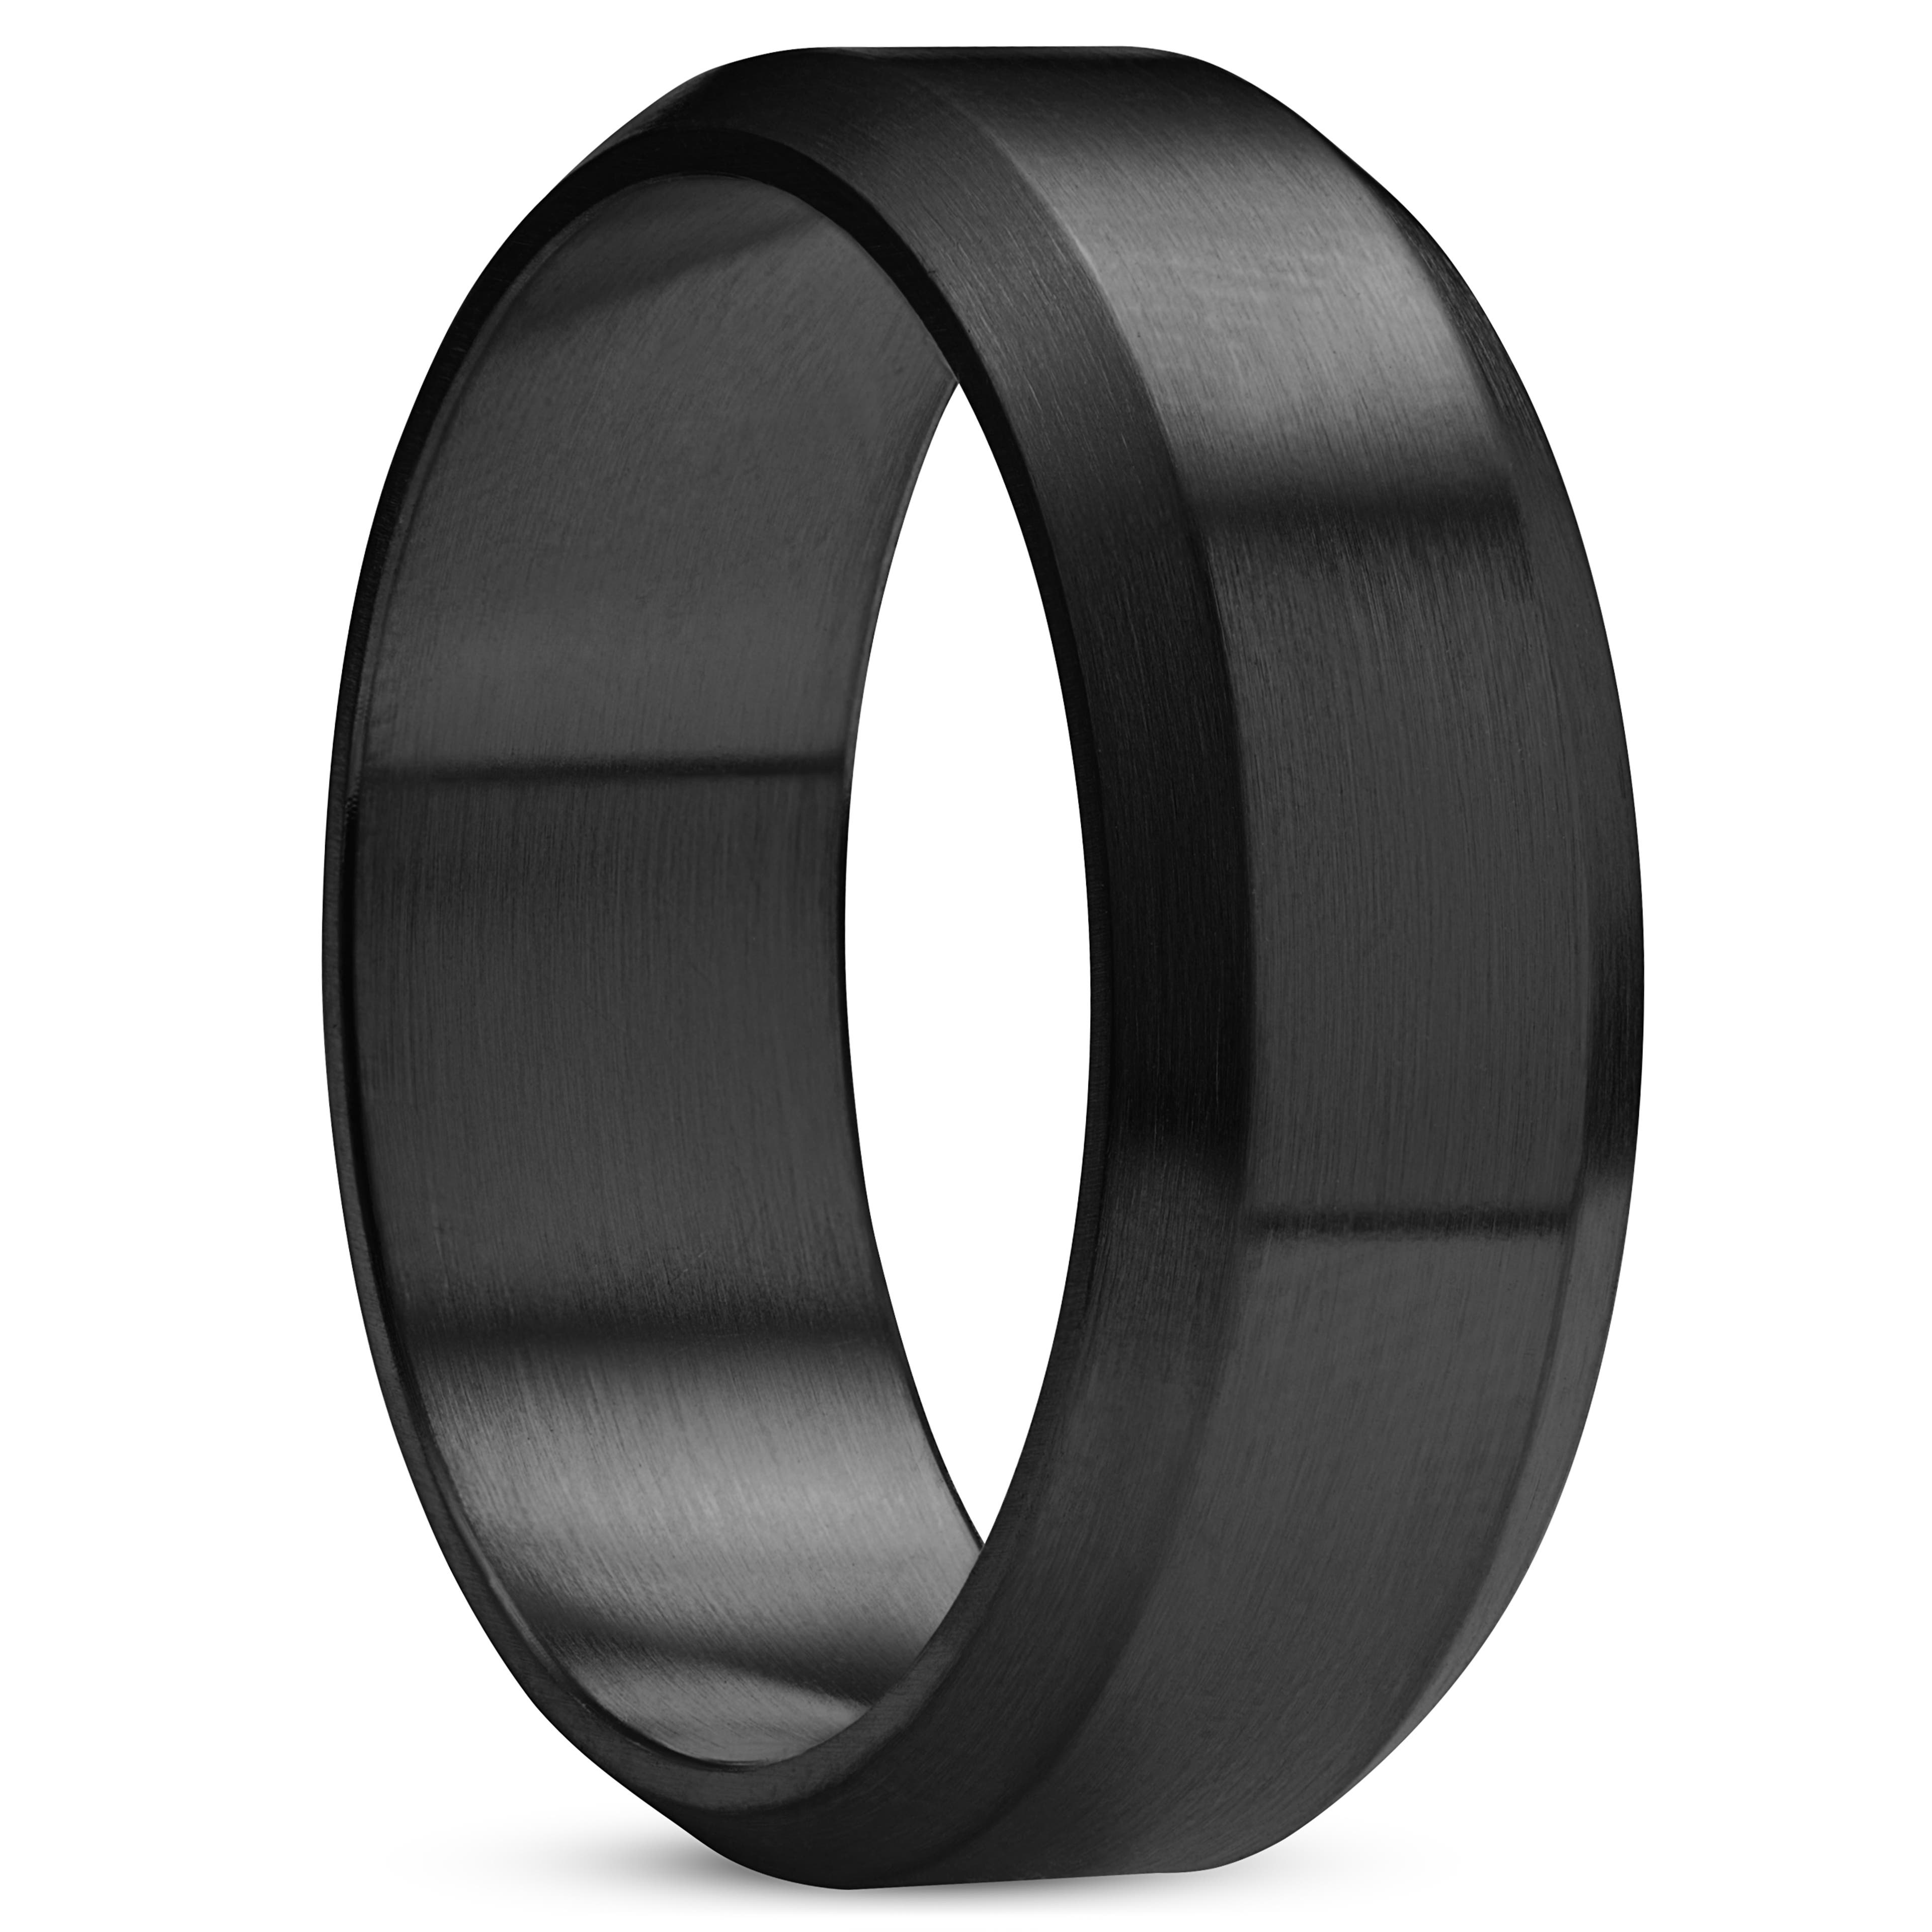 Ferrum | 8 mm Brushed Black Stainless Steel Bevelled Edge Ring